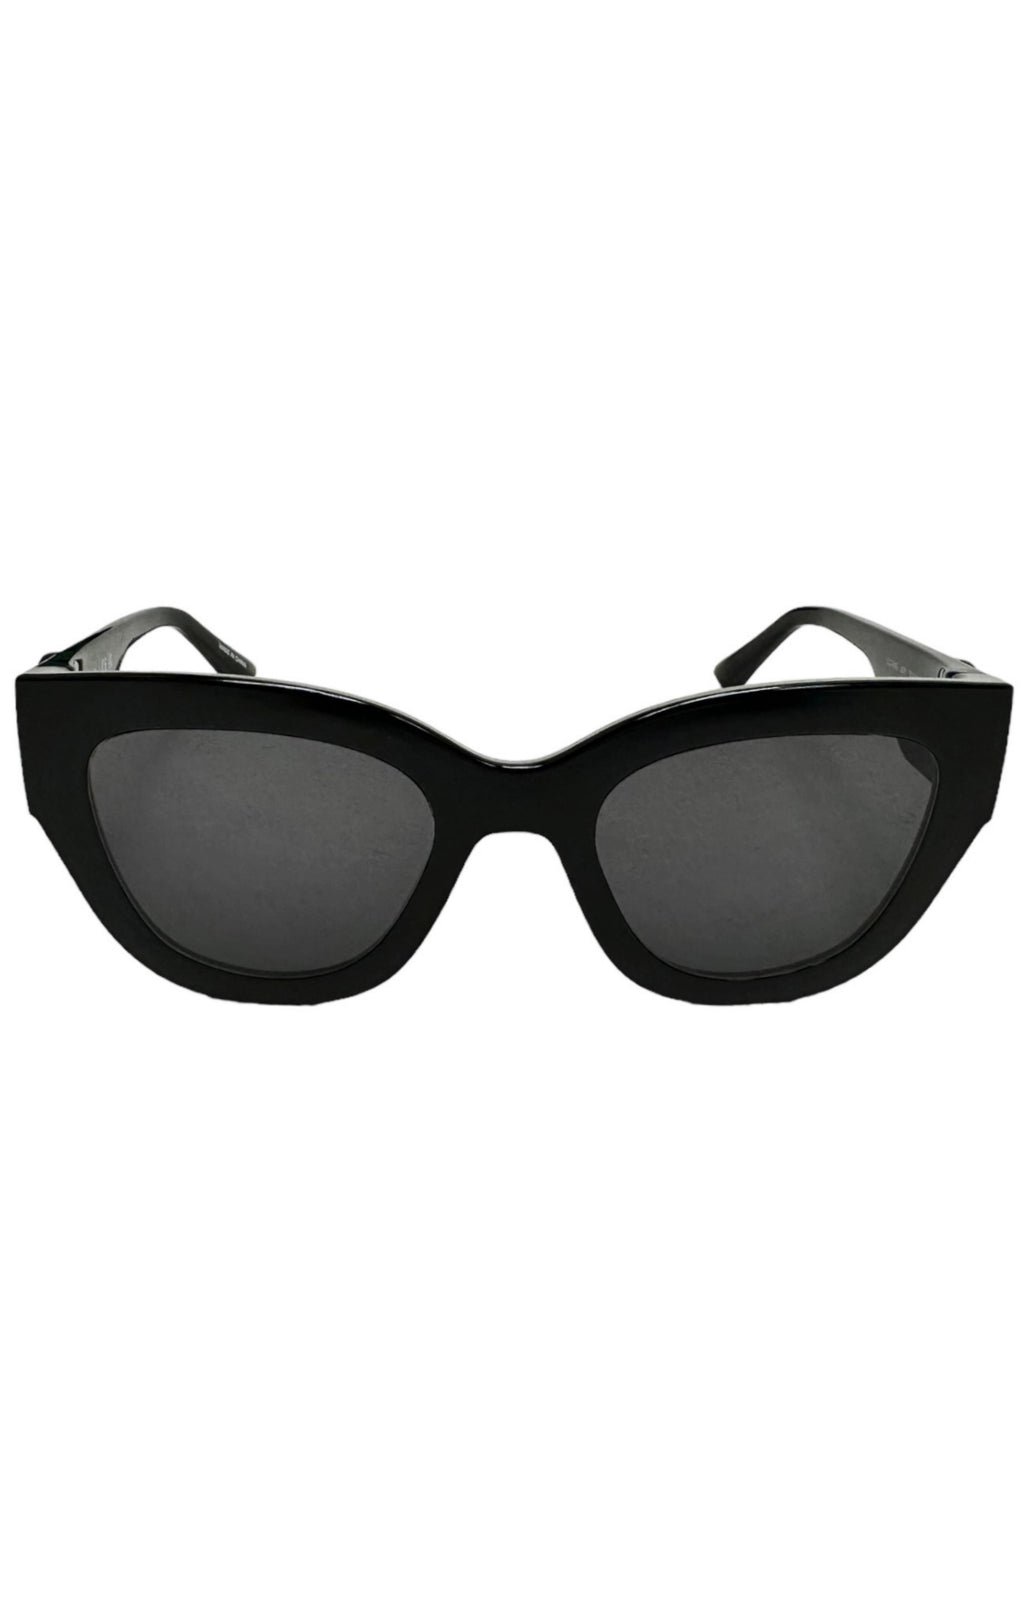 Sunglasses Size: 5.75" x 2.125"